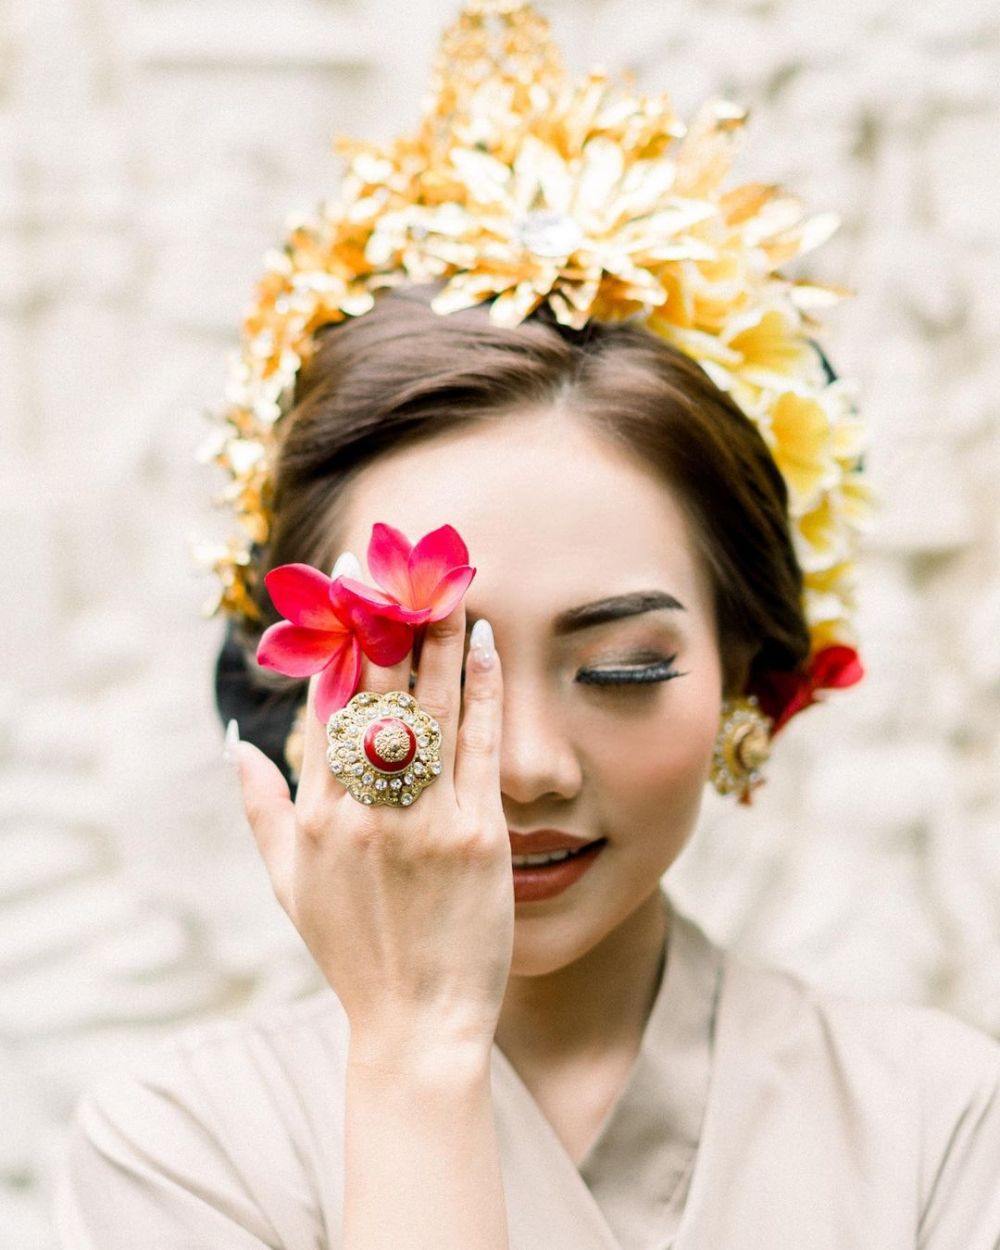 10 Potret Steffy 'Cherrybelle' dan suami pakai busana Bali, manglingi